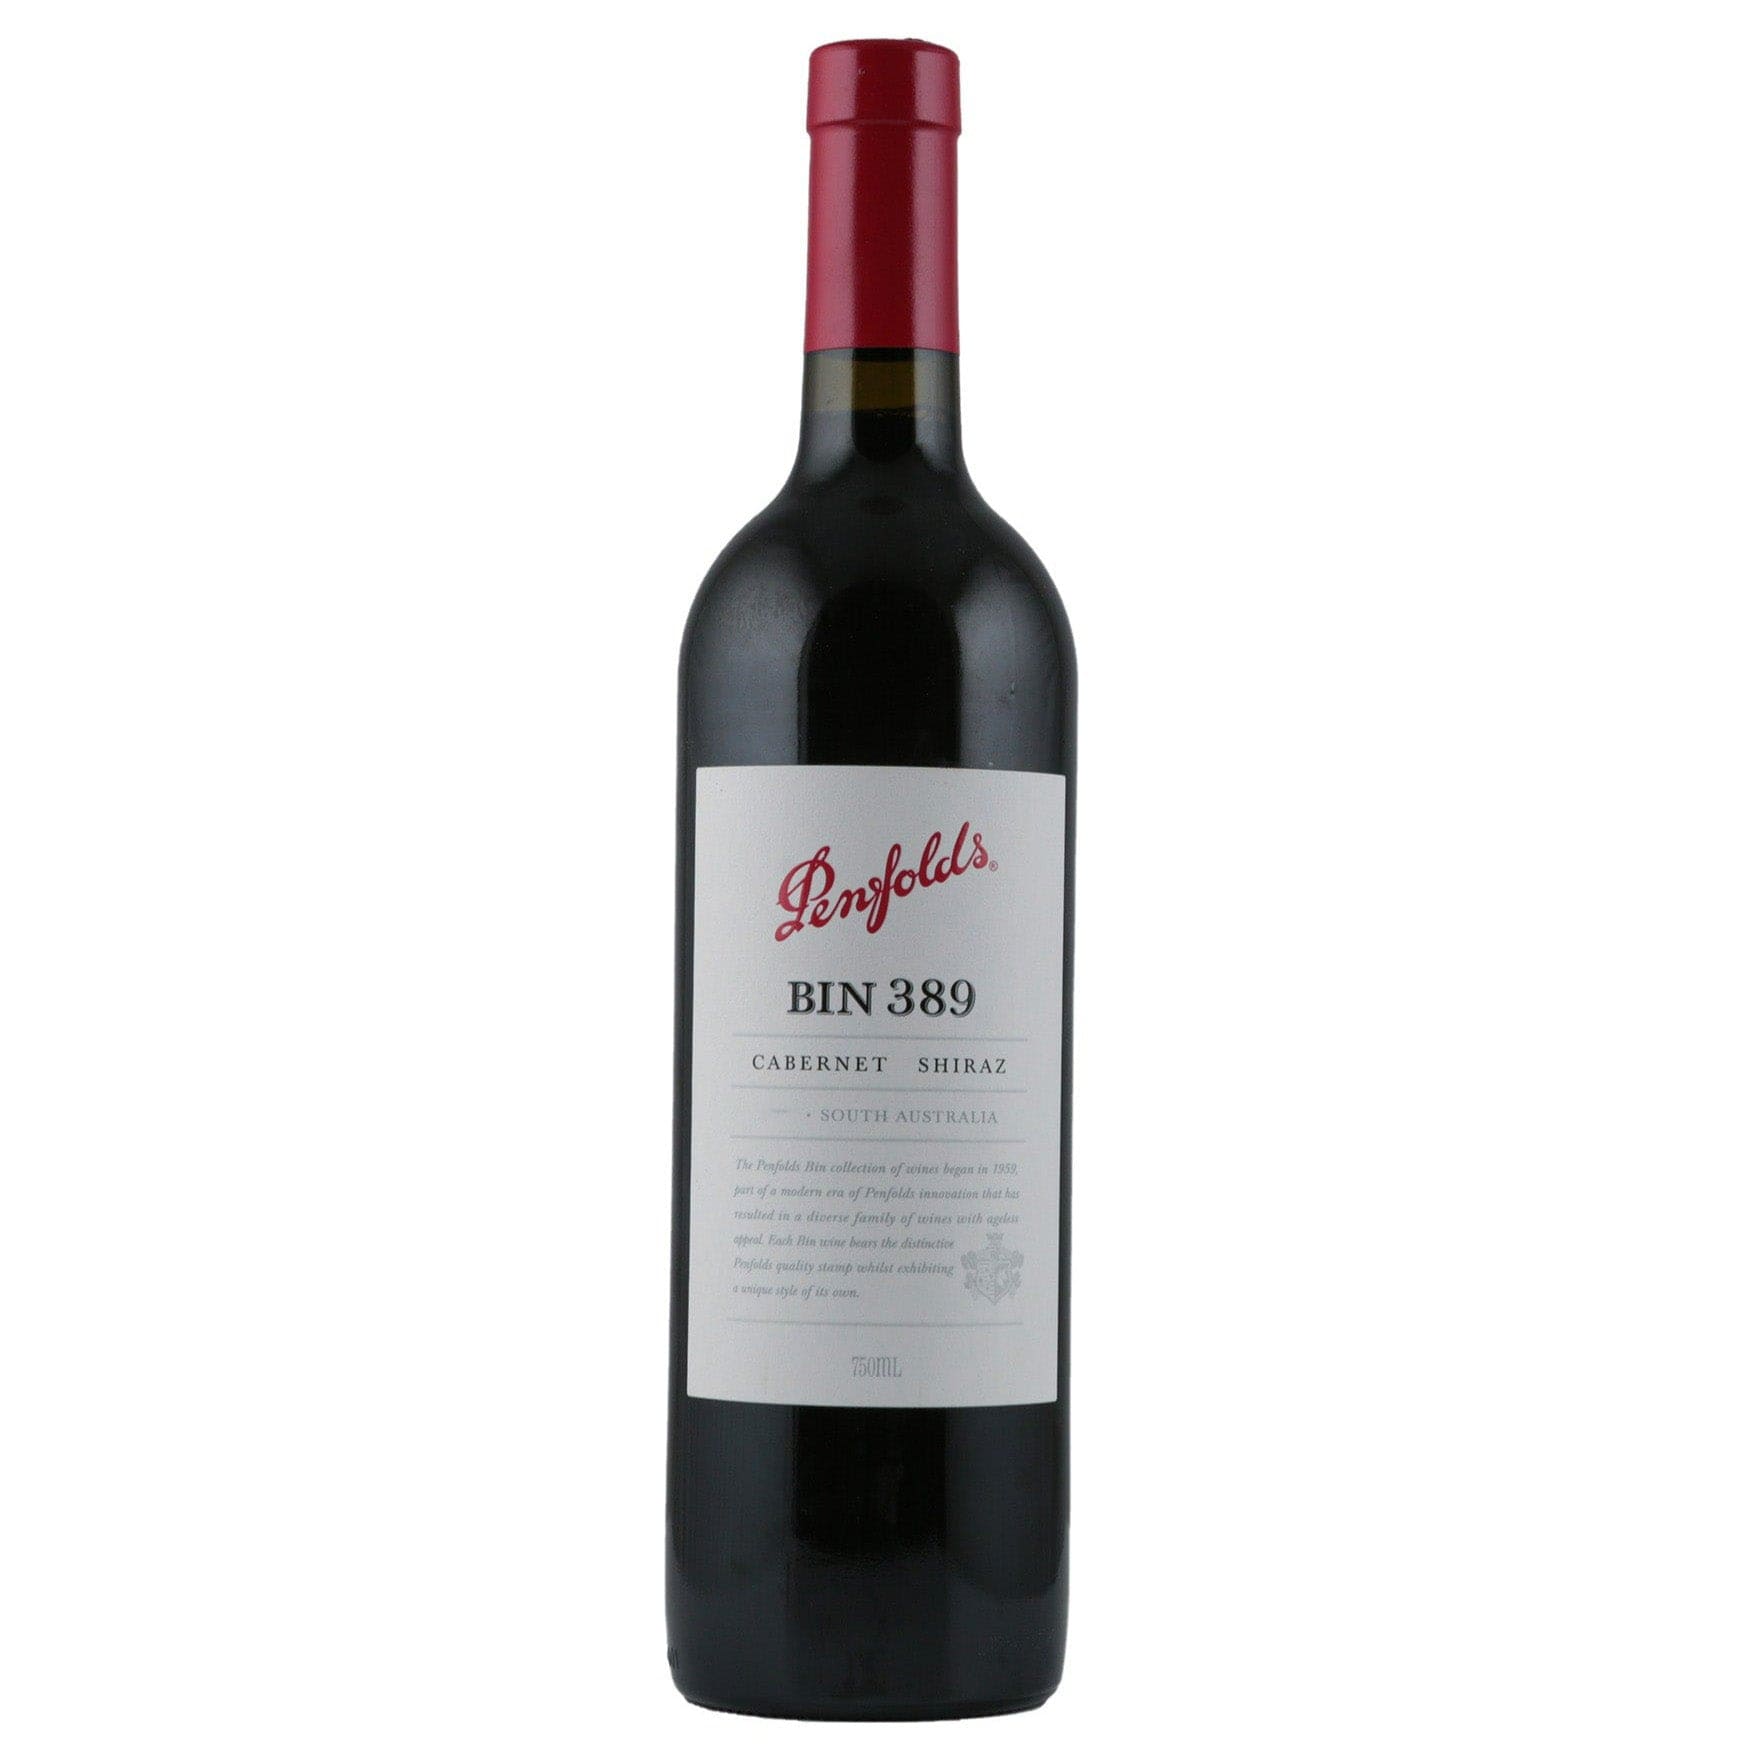 Single bottle of Red wine Penfolds, Bin 389 Cabernet Shiraz, South Australia, 2012 54% Cabernet Sauvignon & 46% Shiraz